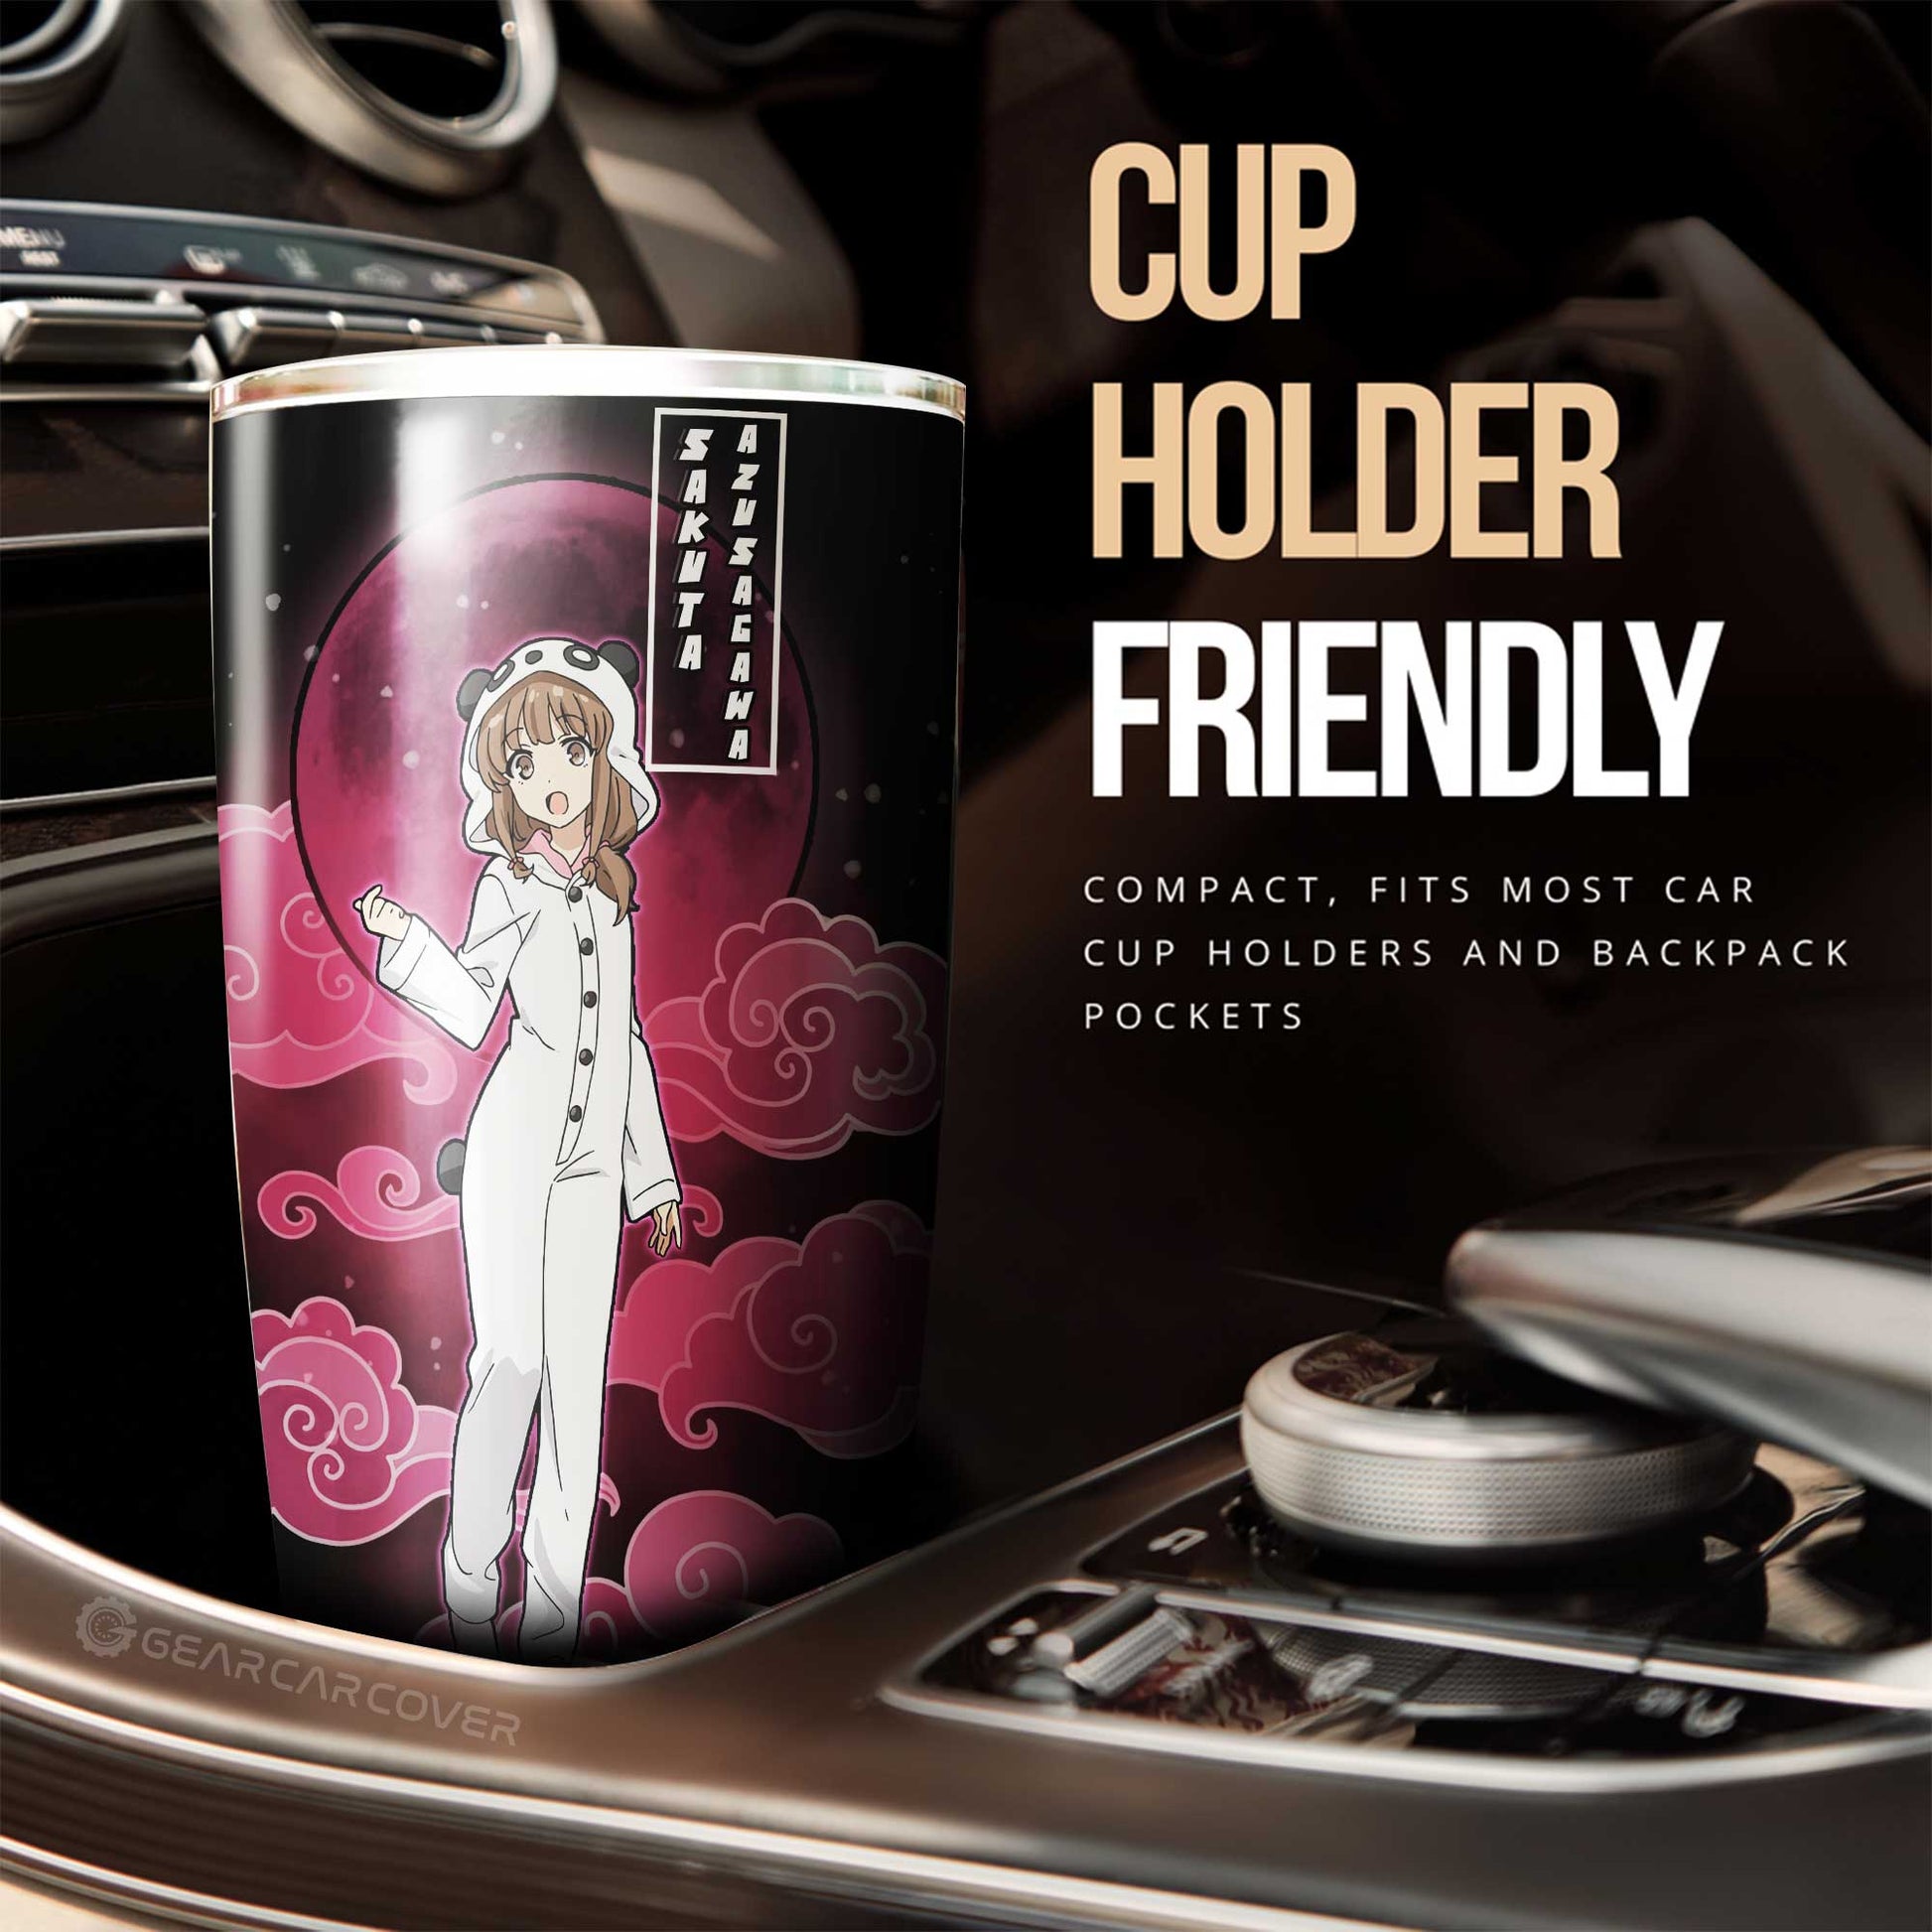 Kaede Azusagawa Tumbler Cup Custom Bunny Girl Senpai Car Accessories - Gearcarcover - 2